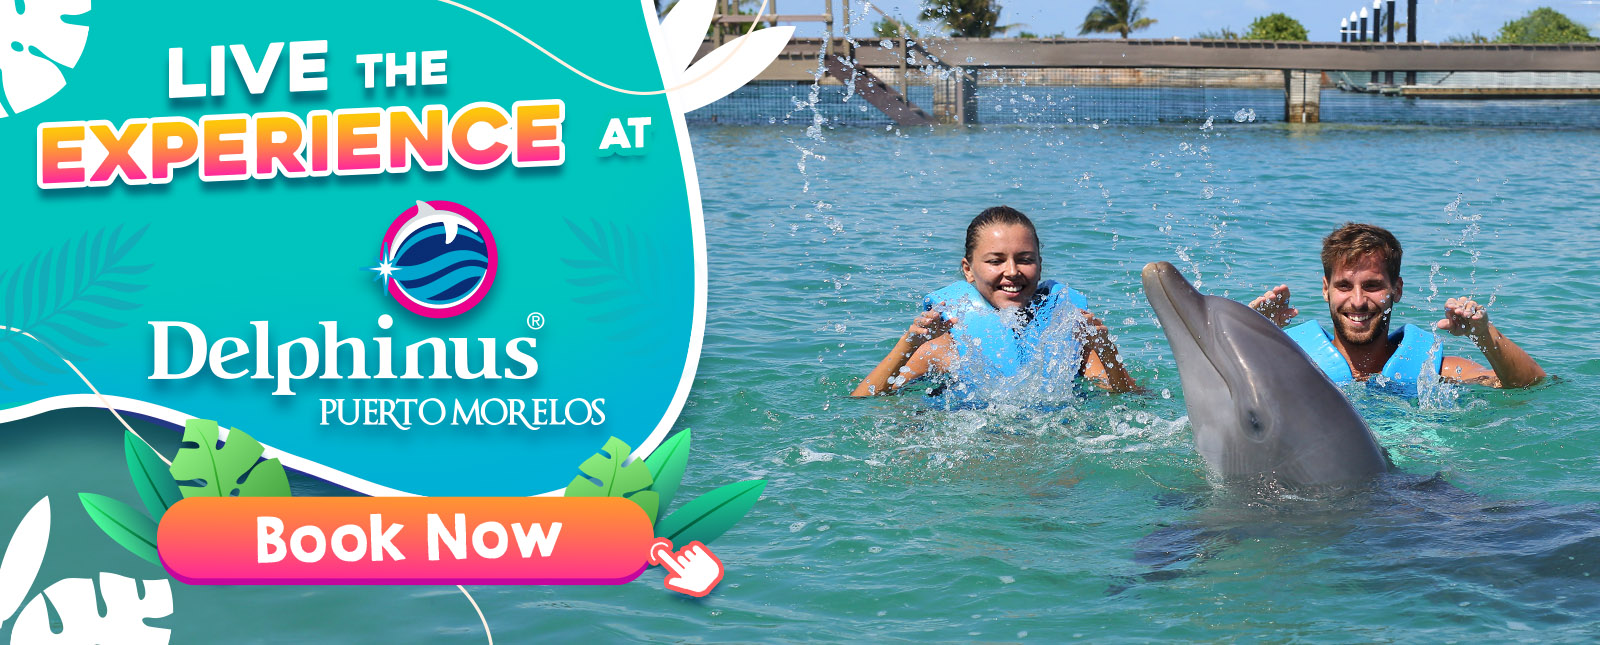 Delphinus Puerto Morelos Swim with dolphins cancun riviera maya